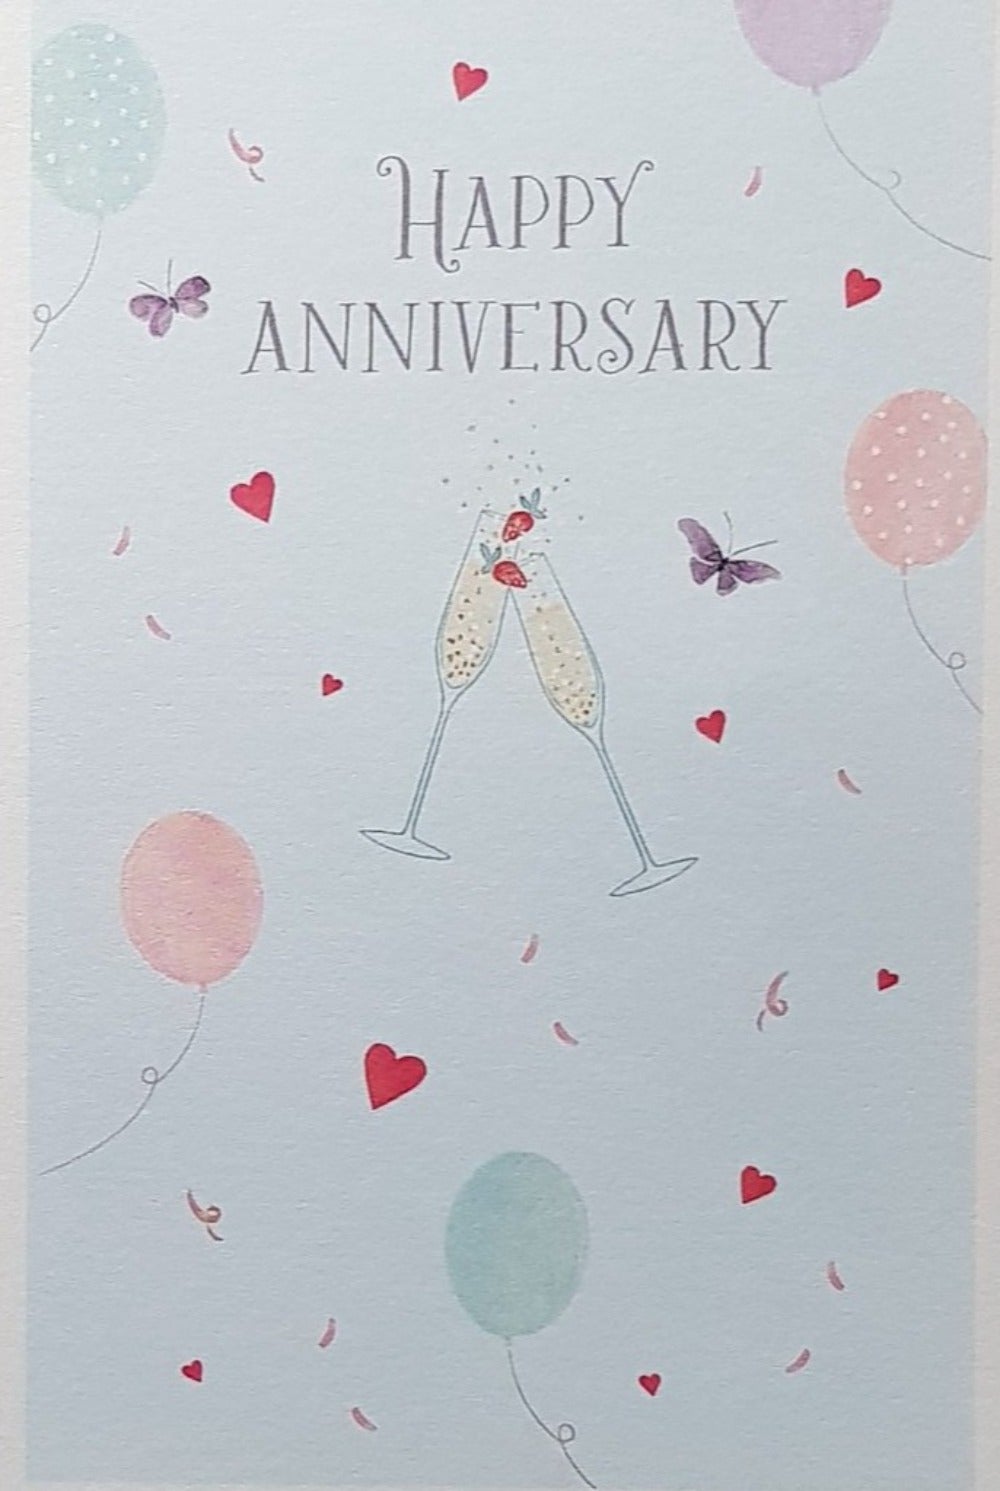 Anniversary Card - 'Happy Anniversary' & Purple Butterflies, Balloons, Hearts